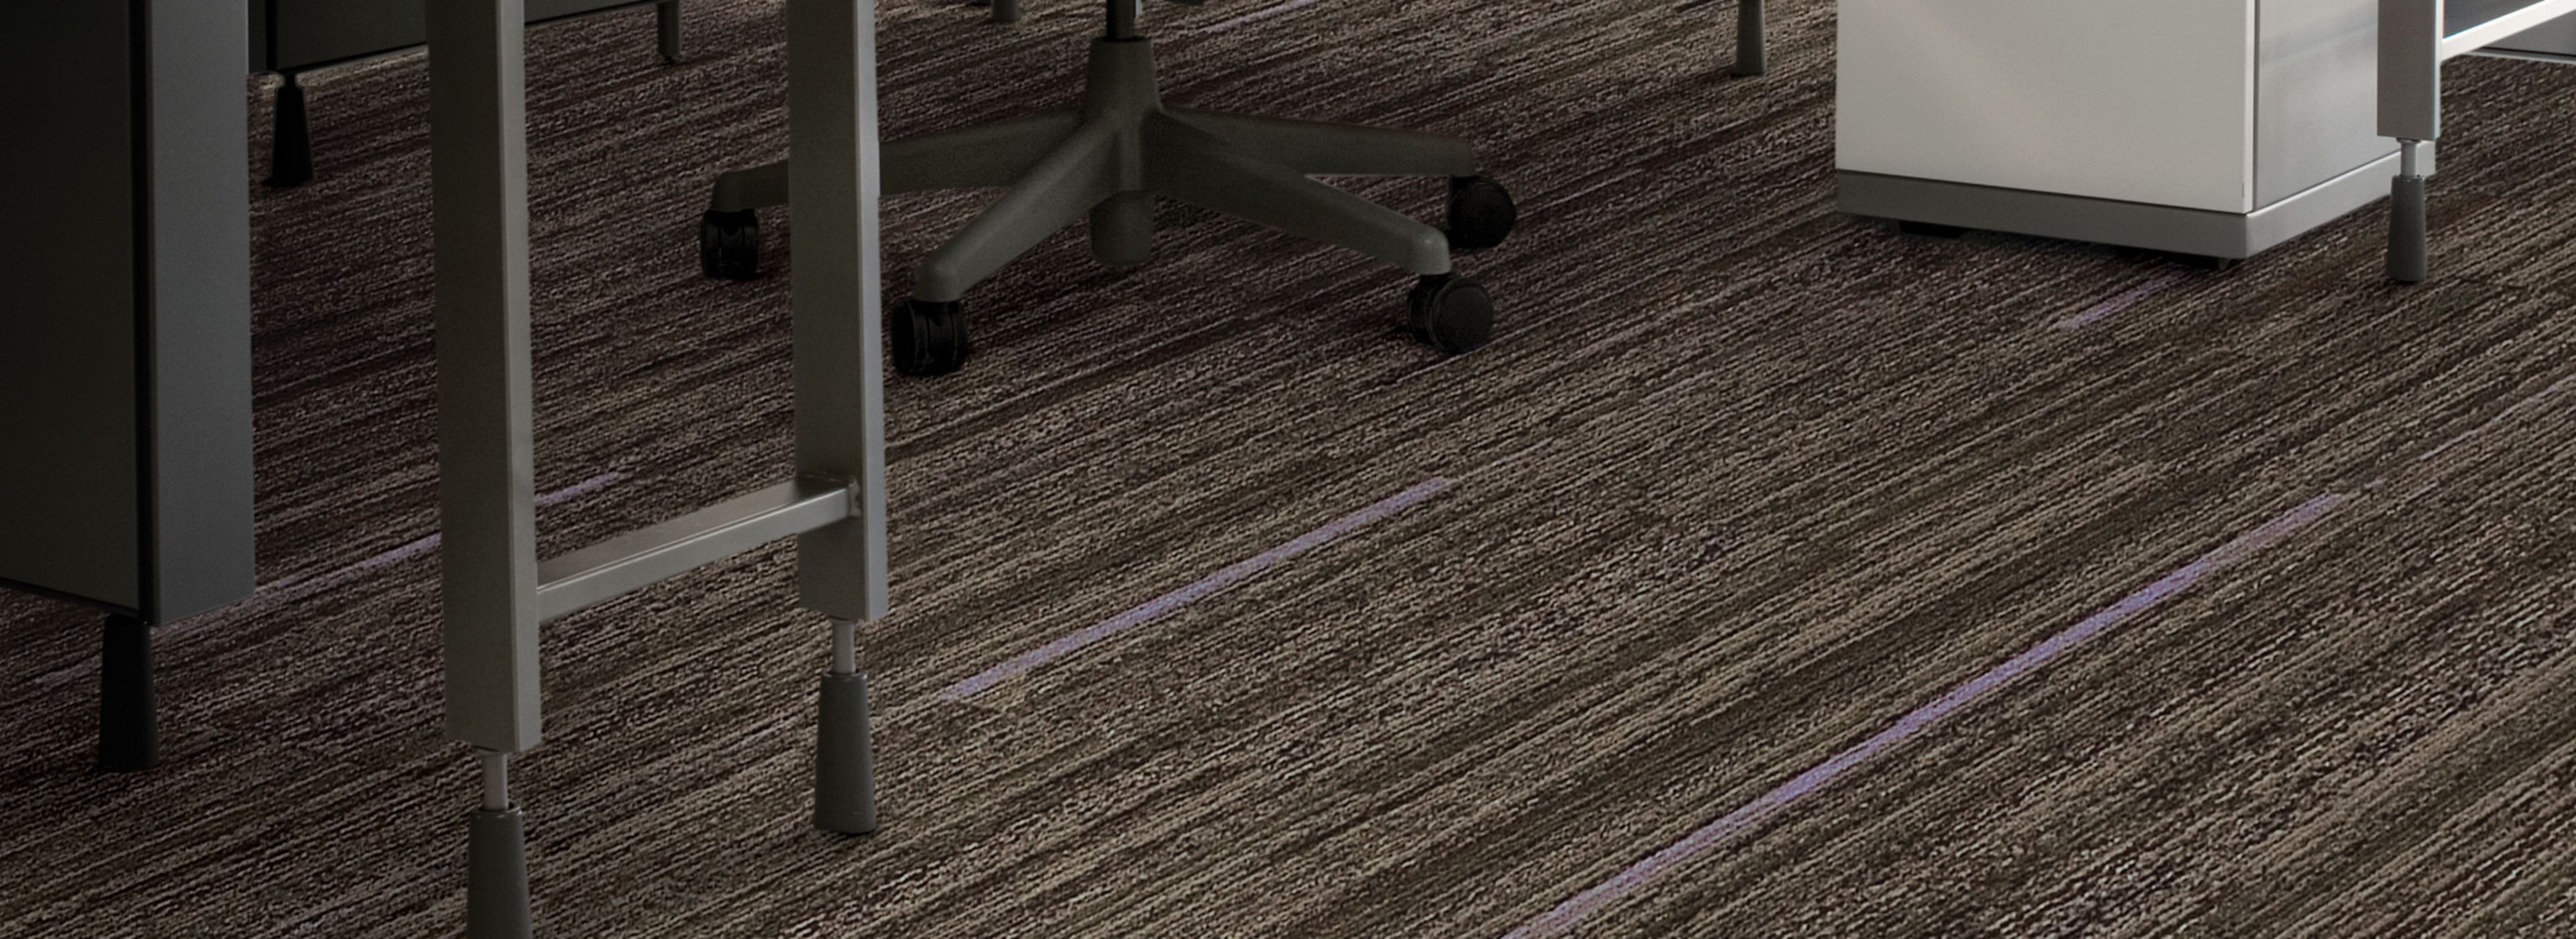 Interface Reincarnation carpet tile in office cubicle area imagen número 1